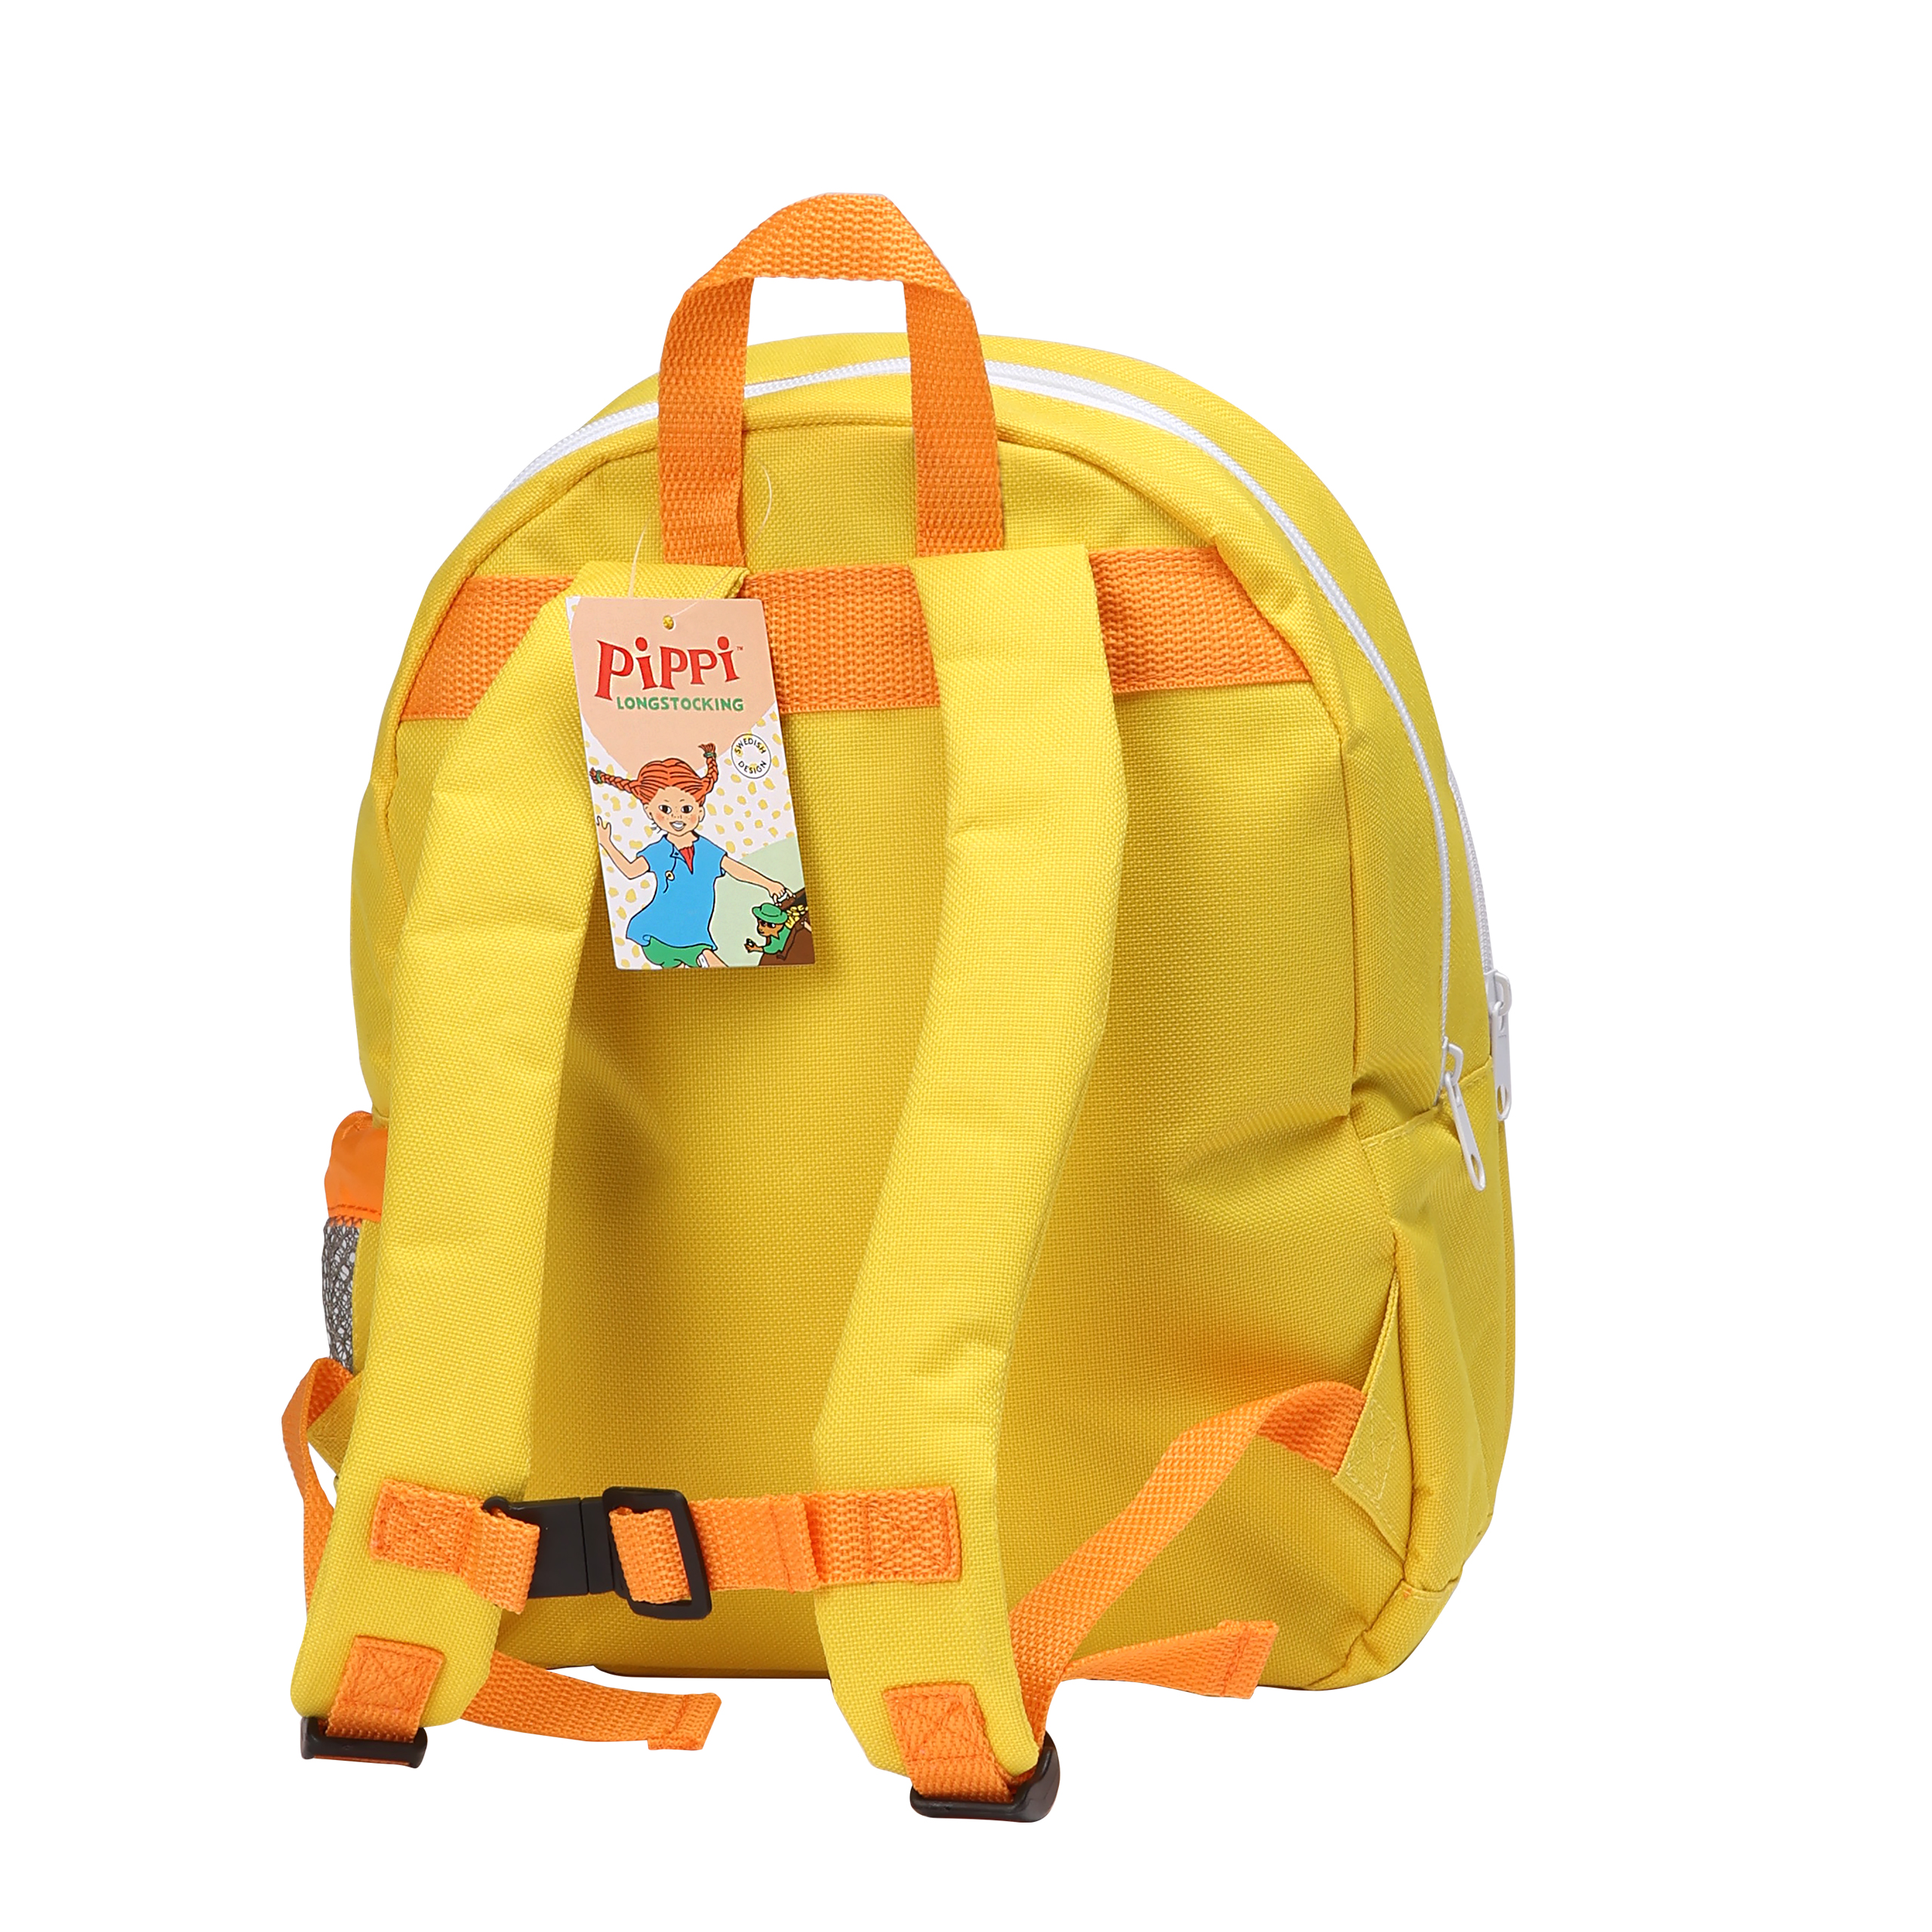 Kids bags pippi kids bag backpack yellow